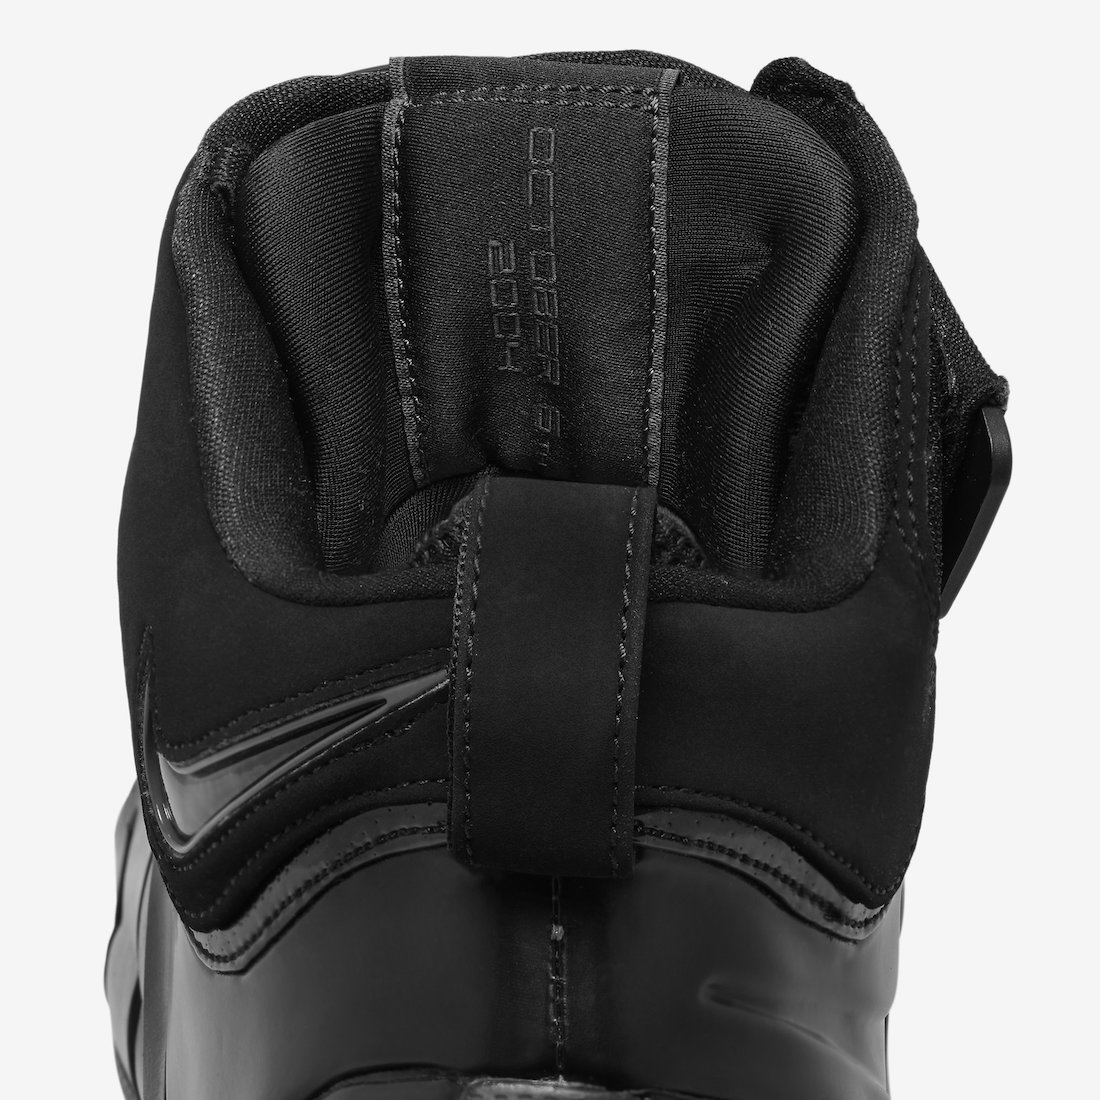 Nike year LeBron 4 Black Anthracite 2023 FJ1597 001 Release Date 9